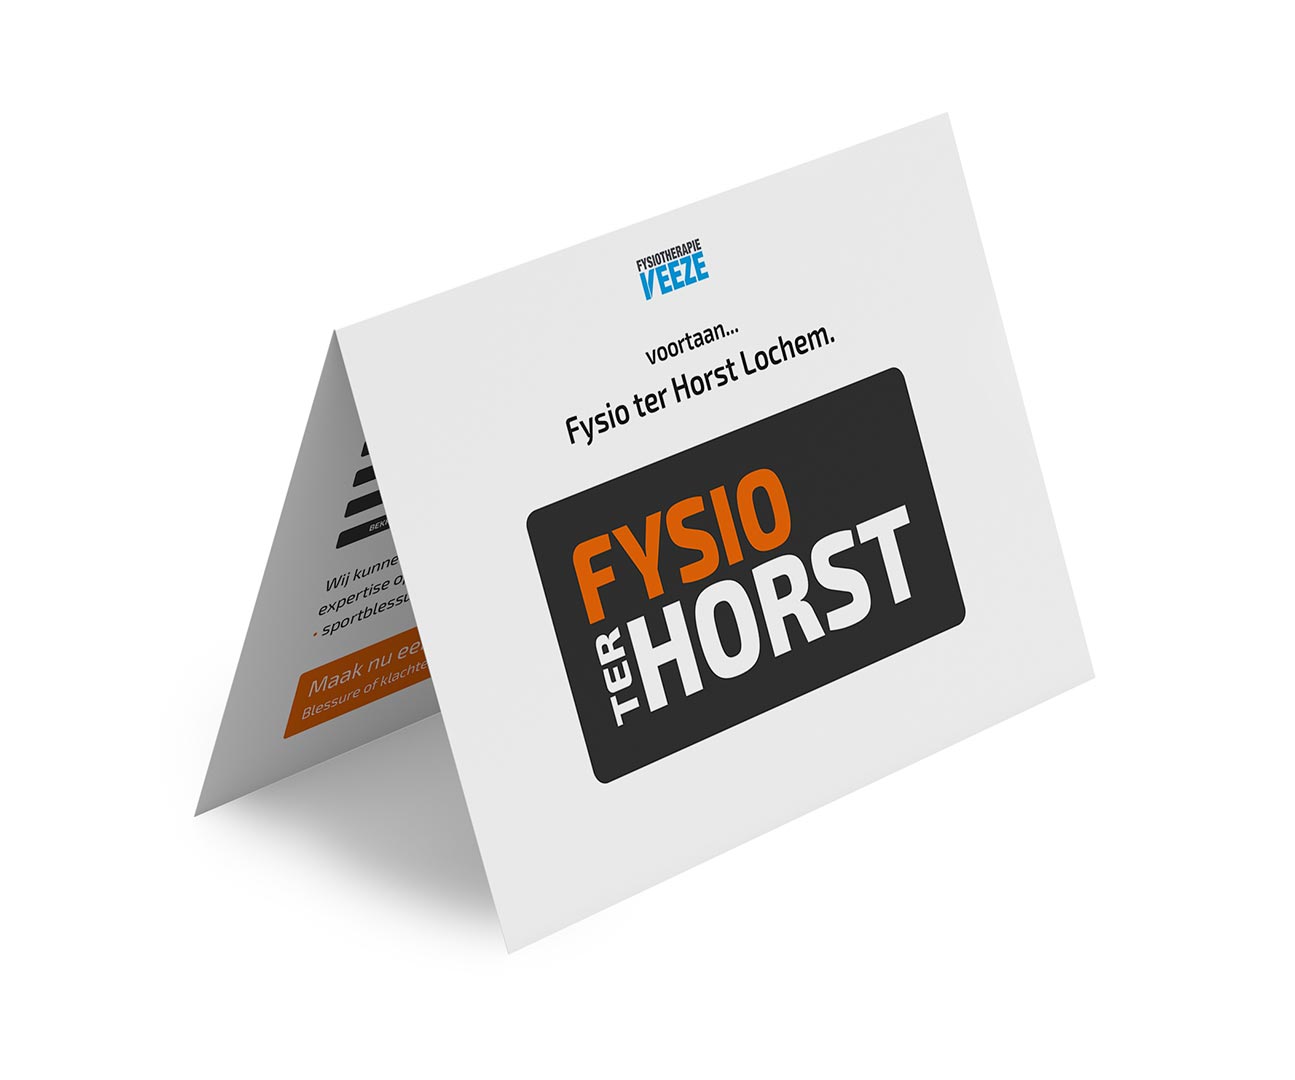 Fysio Ter Horst branding